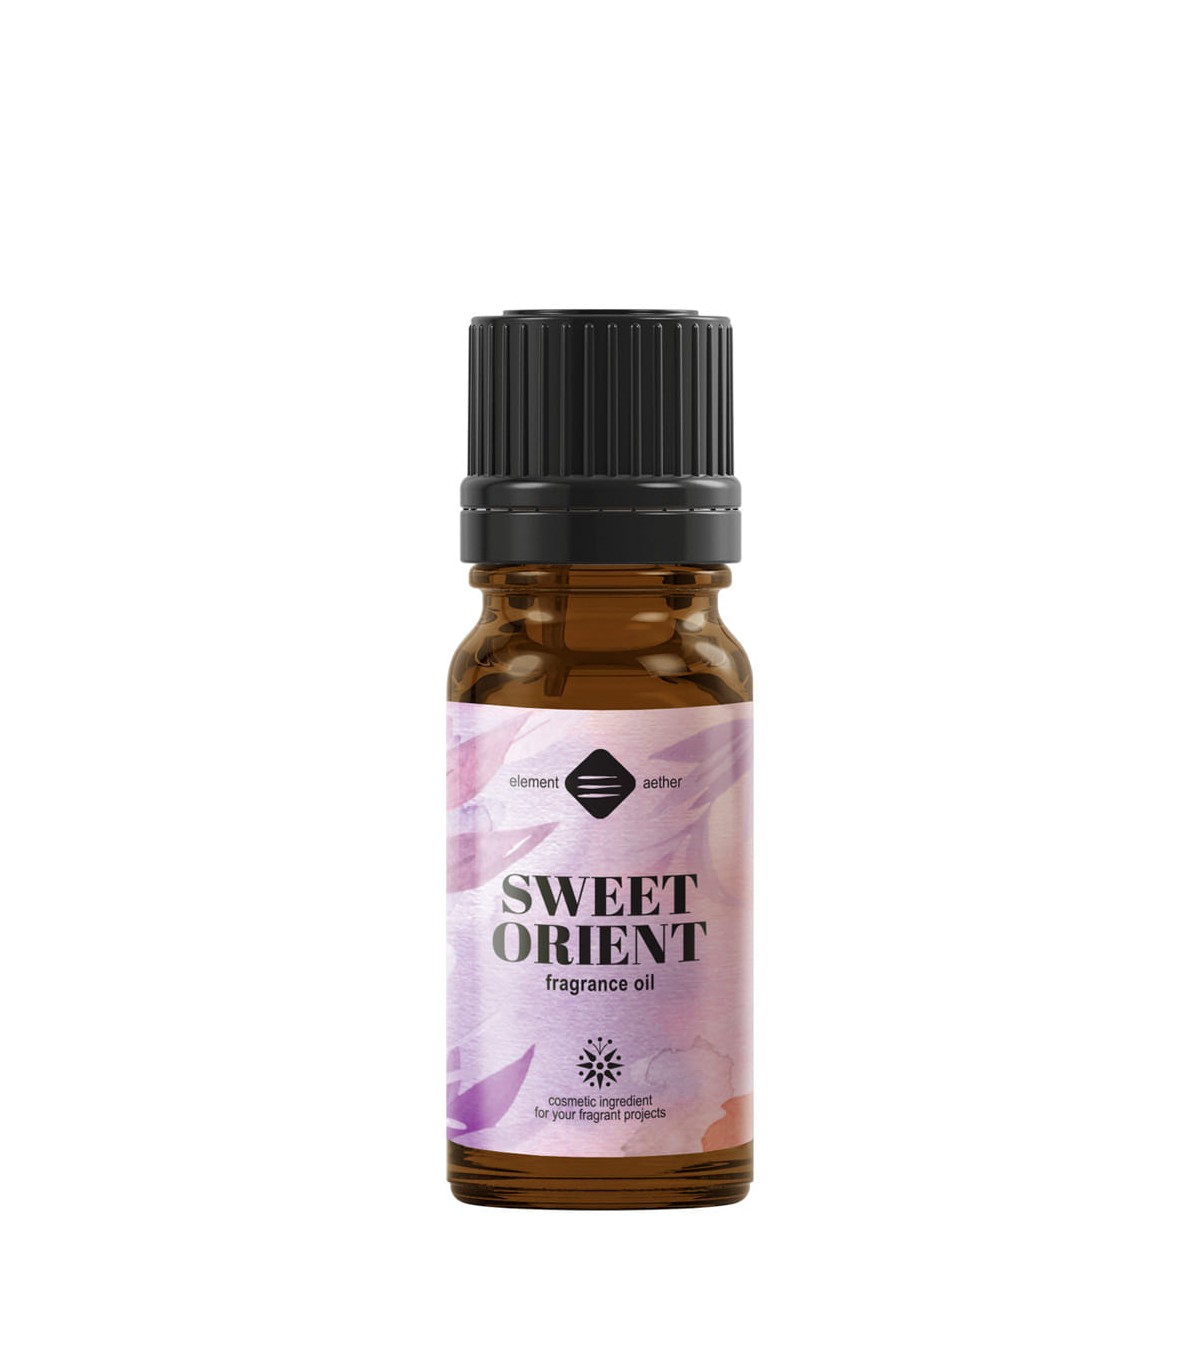 Sweet Orient Fragrance oil